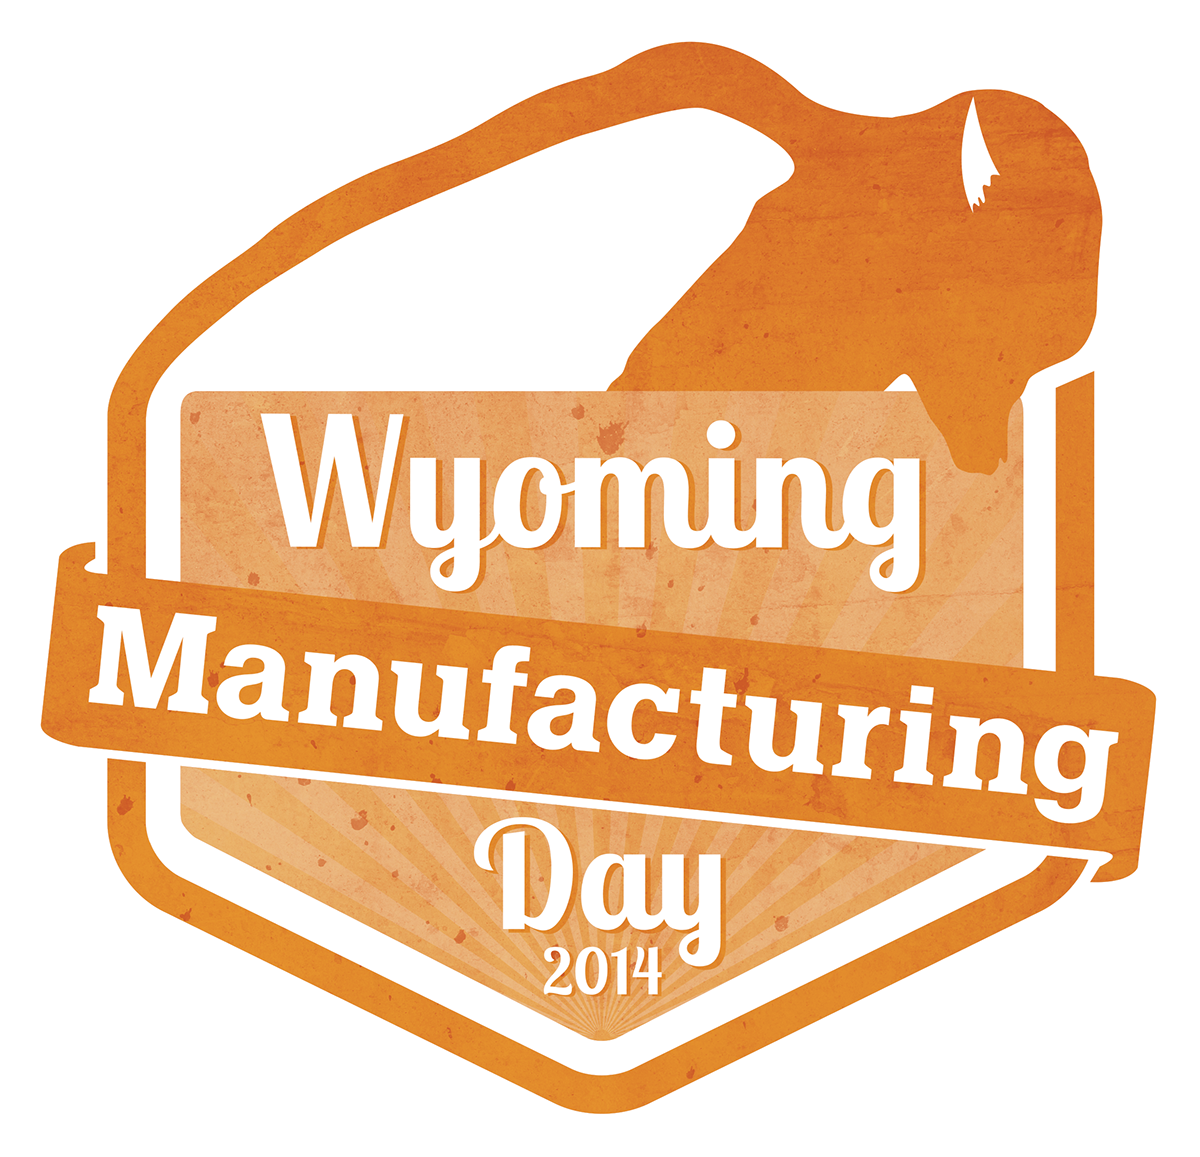 manufacturing Wyoming logo Event Buffalo orange celebration poster flyer brandidentity shirt sticker ad